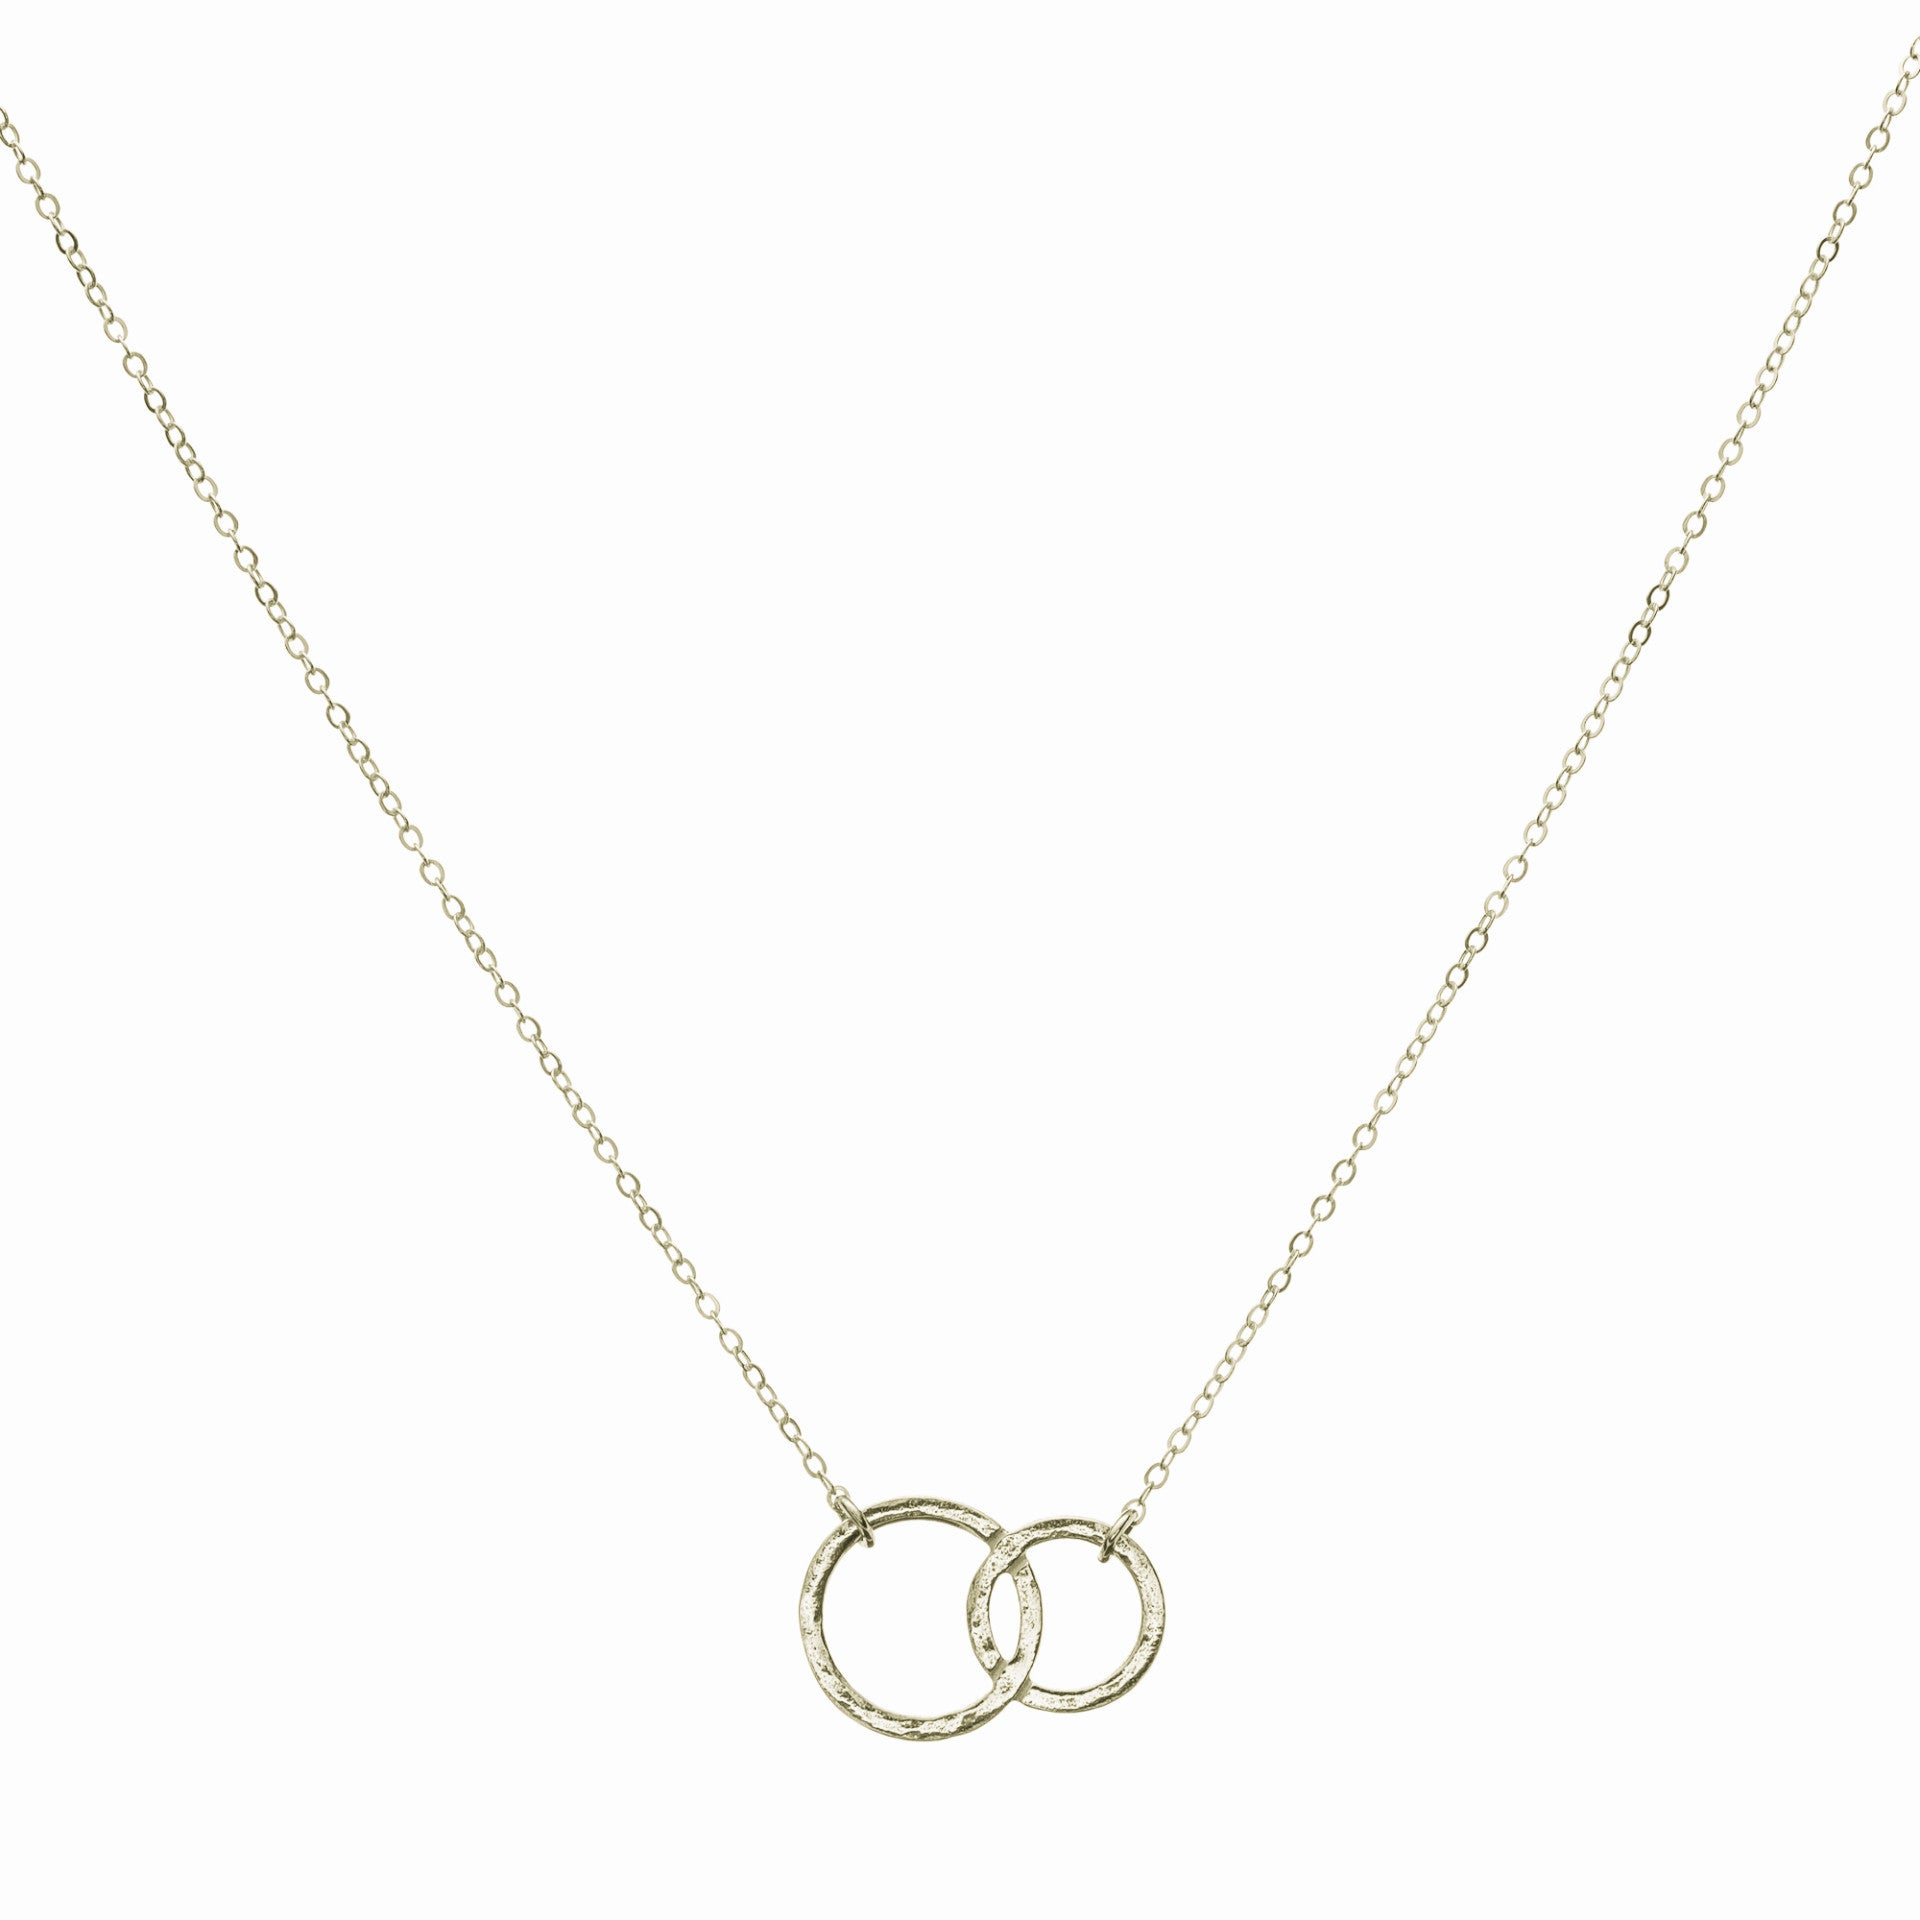 Double Karma pendant & Helen Chain Necklace